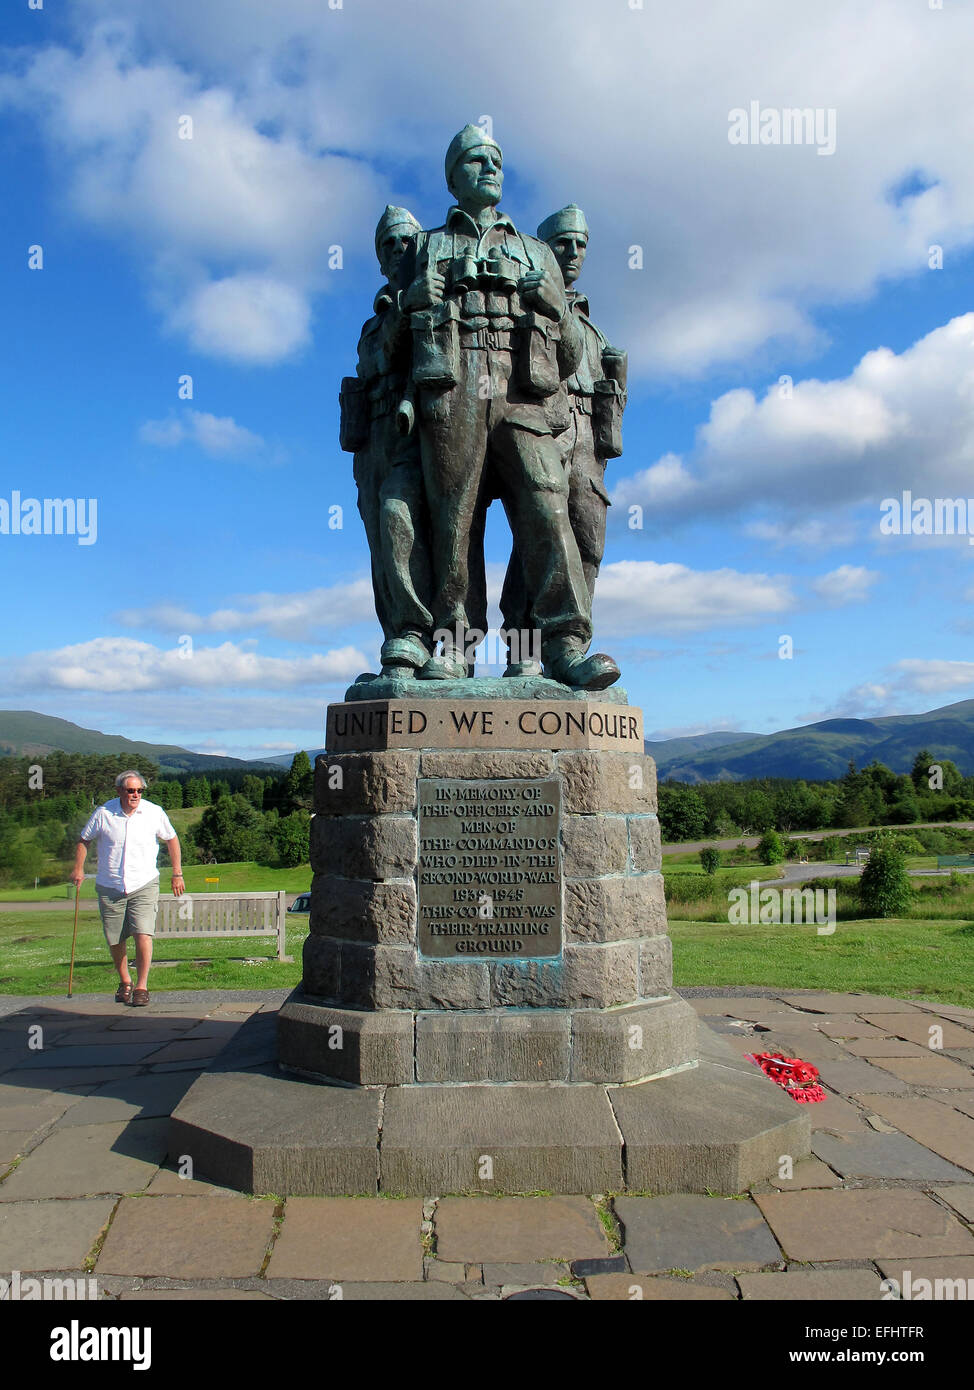 Commando Memorial Monument dedicated to the Commando forces of the WW2, Spean Bridge, Lochaber, Scottish Highlands, Scotland Stock Photo